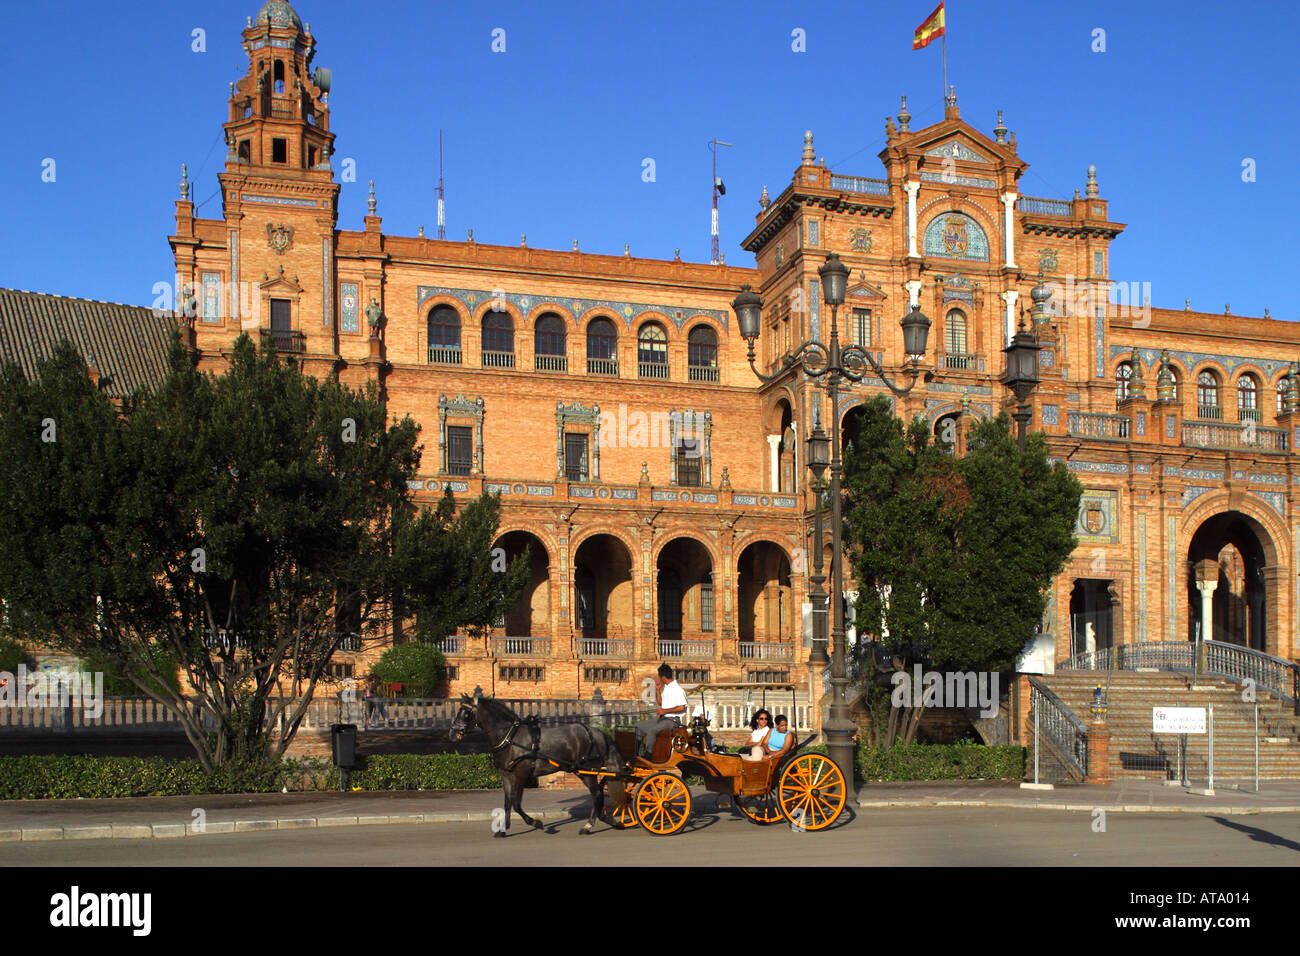 Plaza de Espana Seville Sevilla Andalusia Palcio Central carriage with tourists Stock Photo